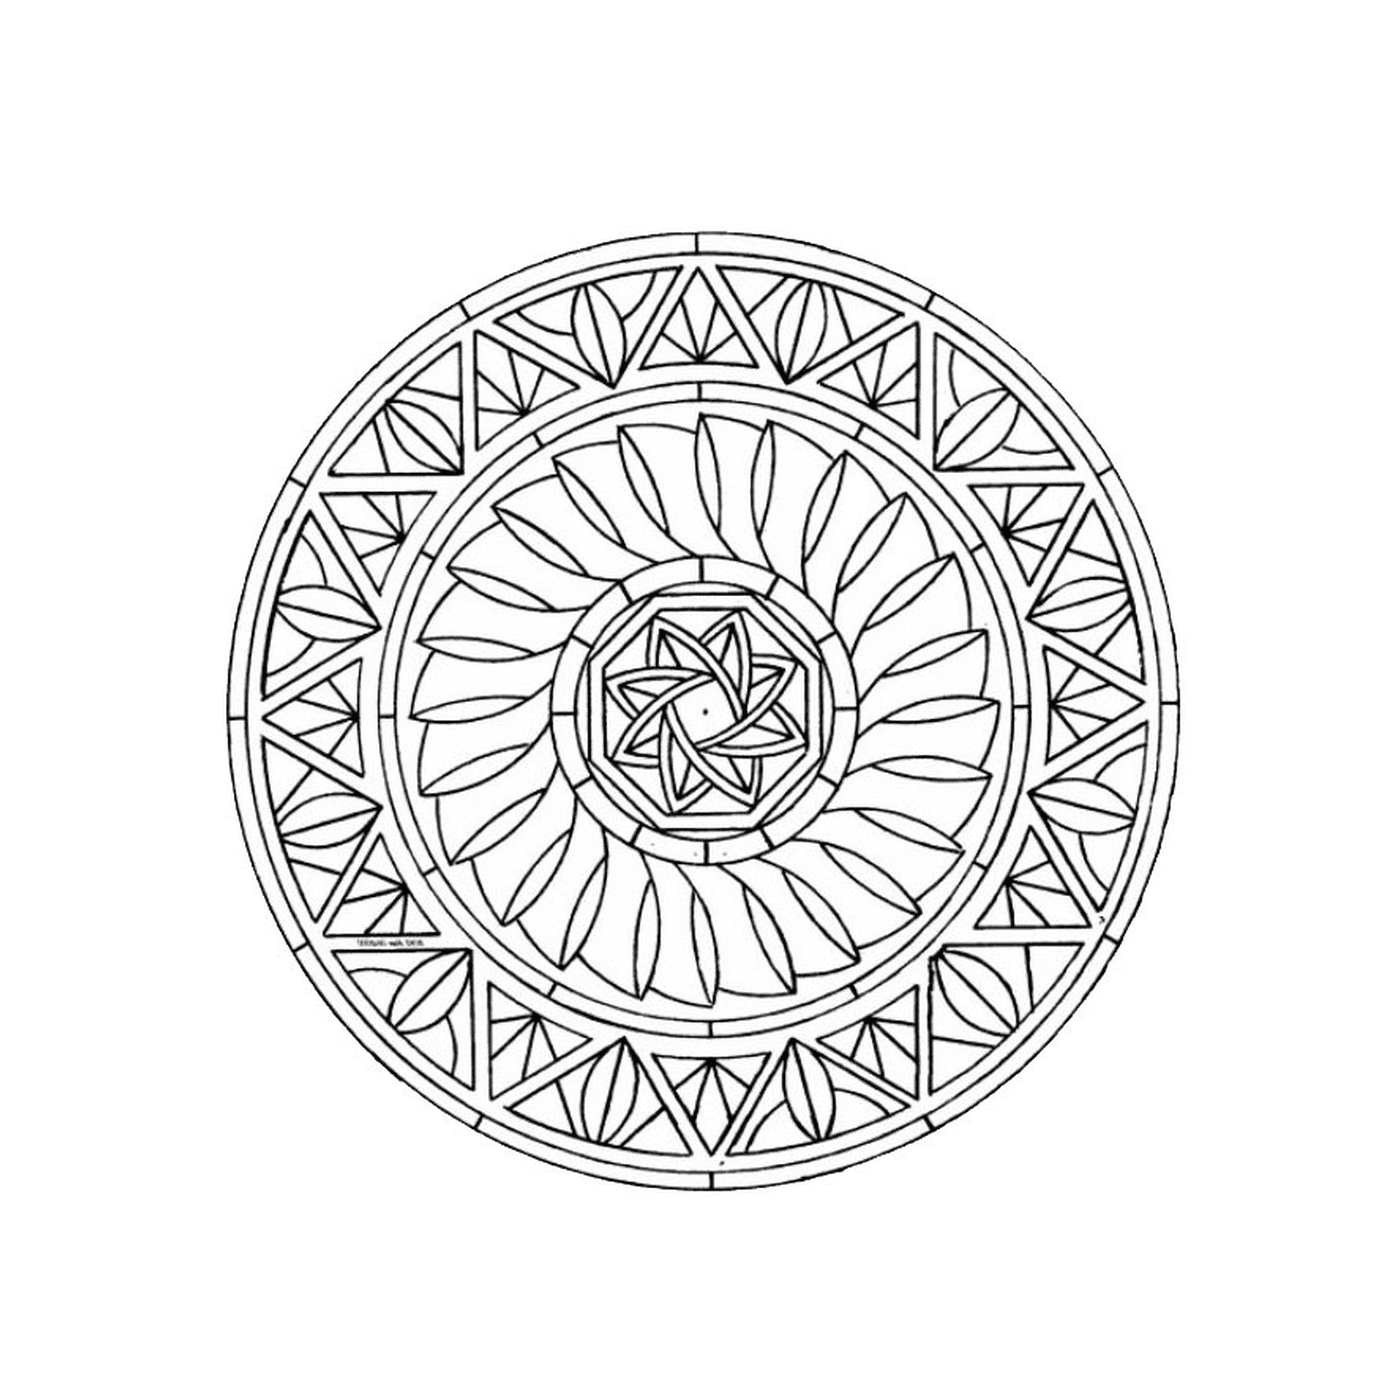  Mandala with geometric shapes 